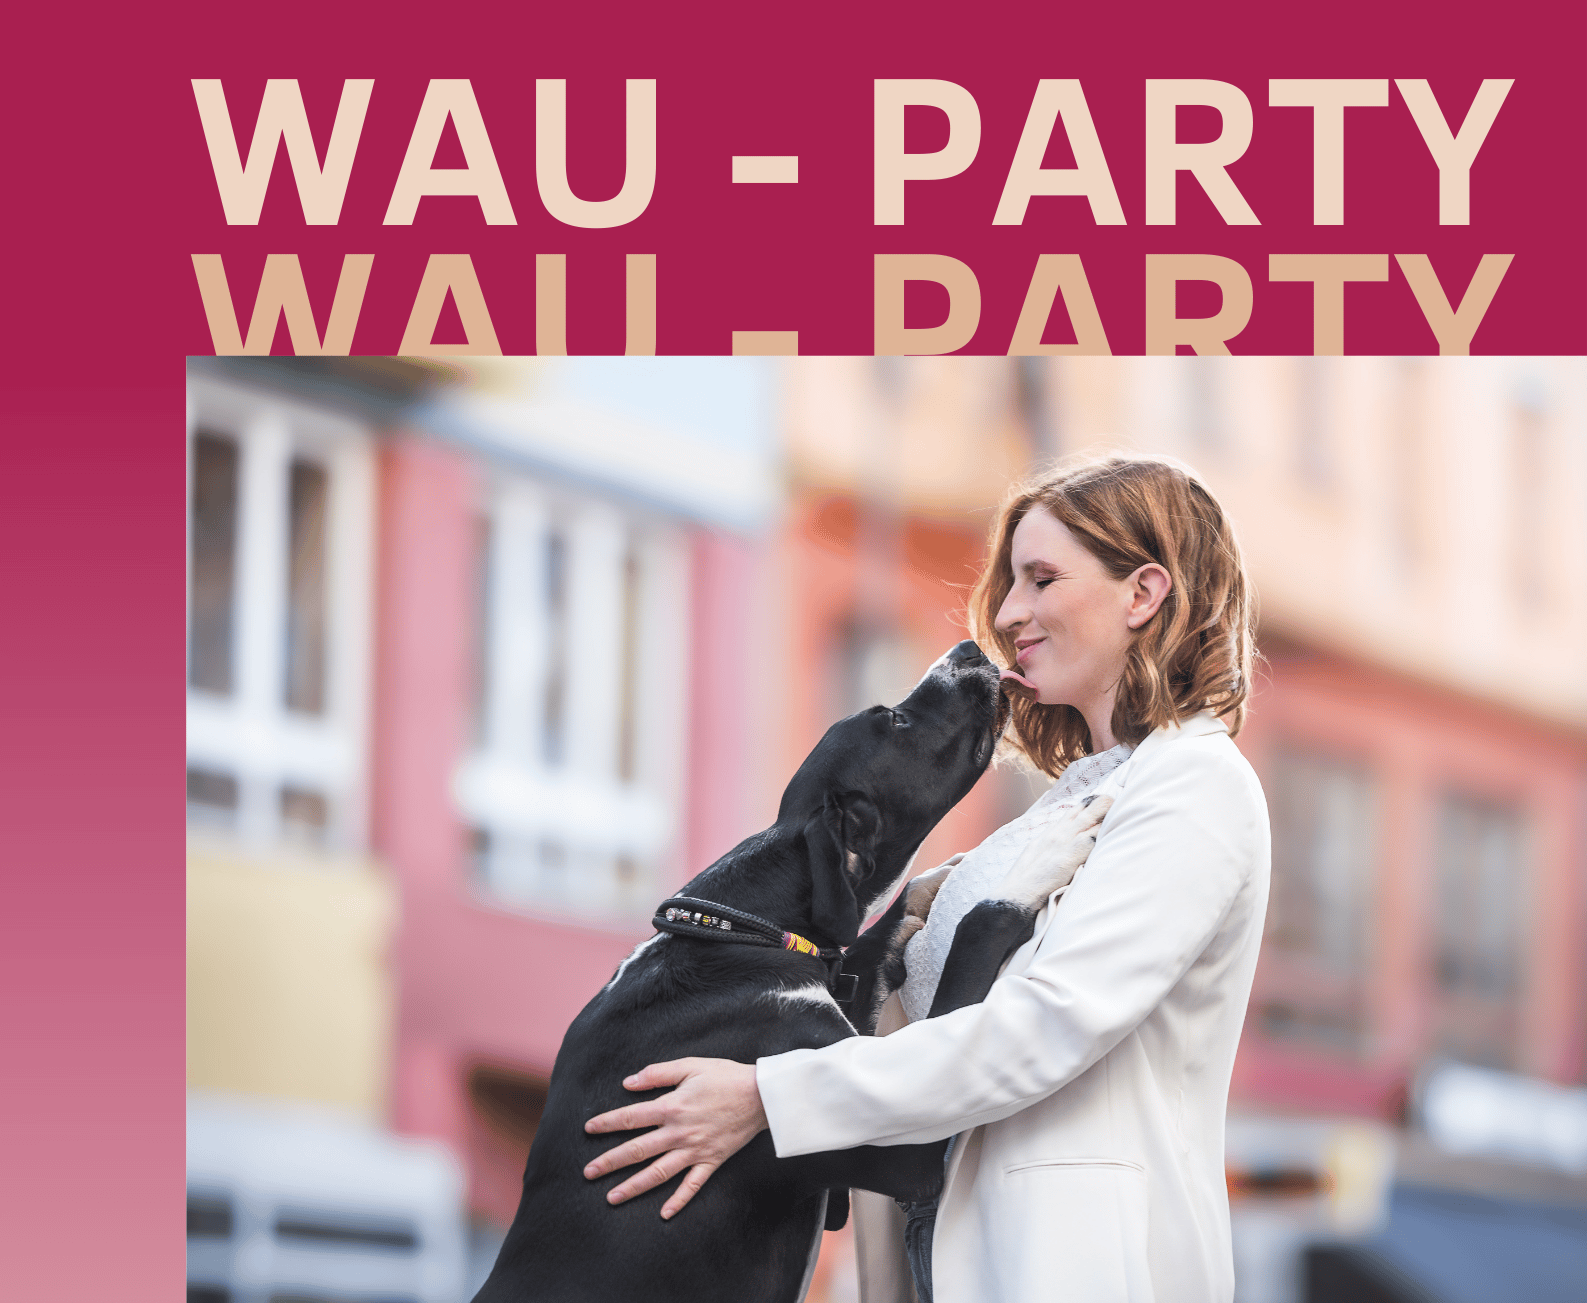 Wau-Party